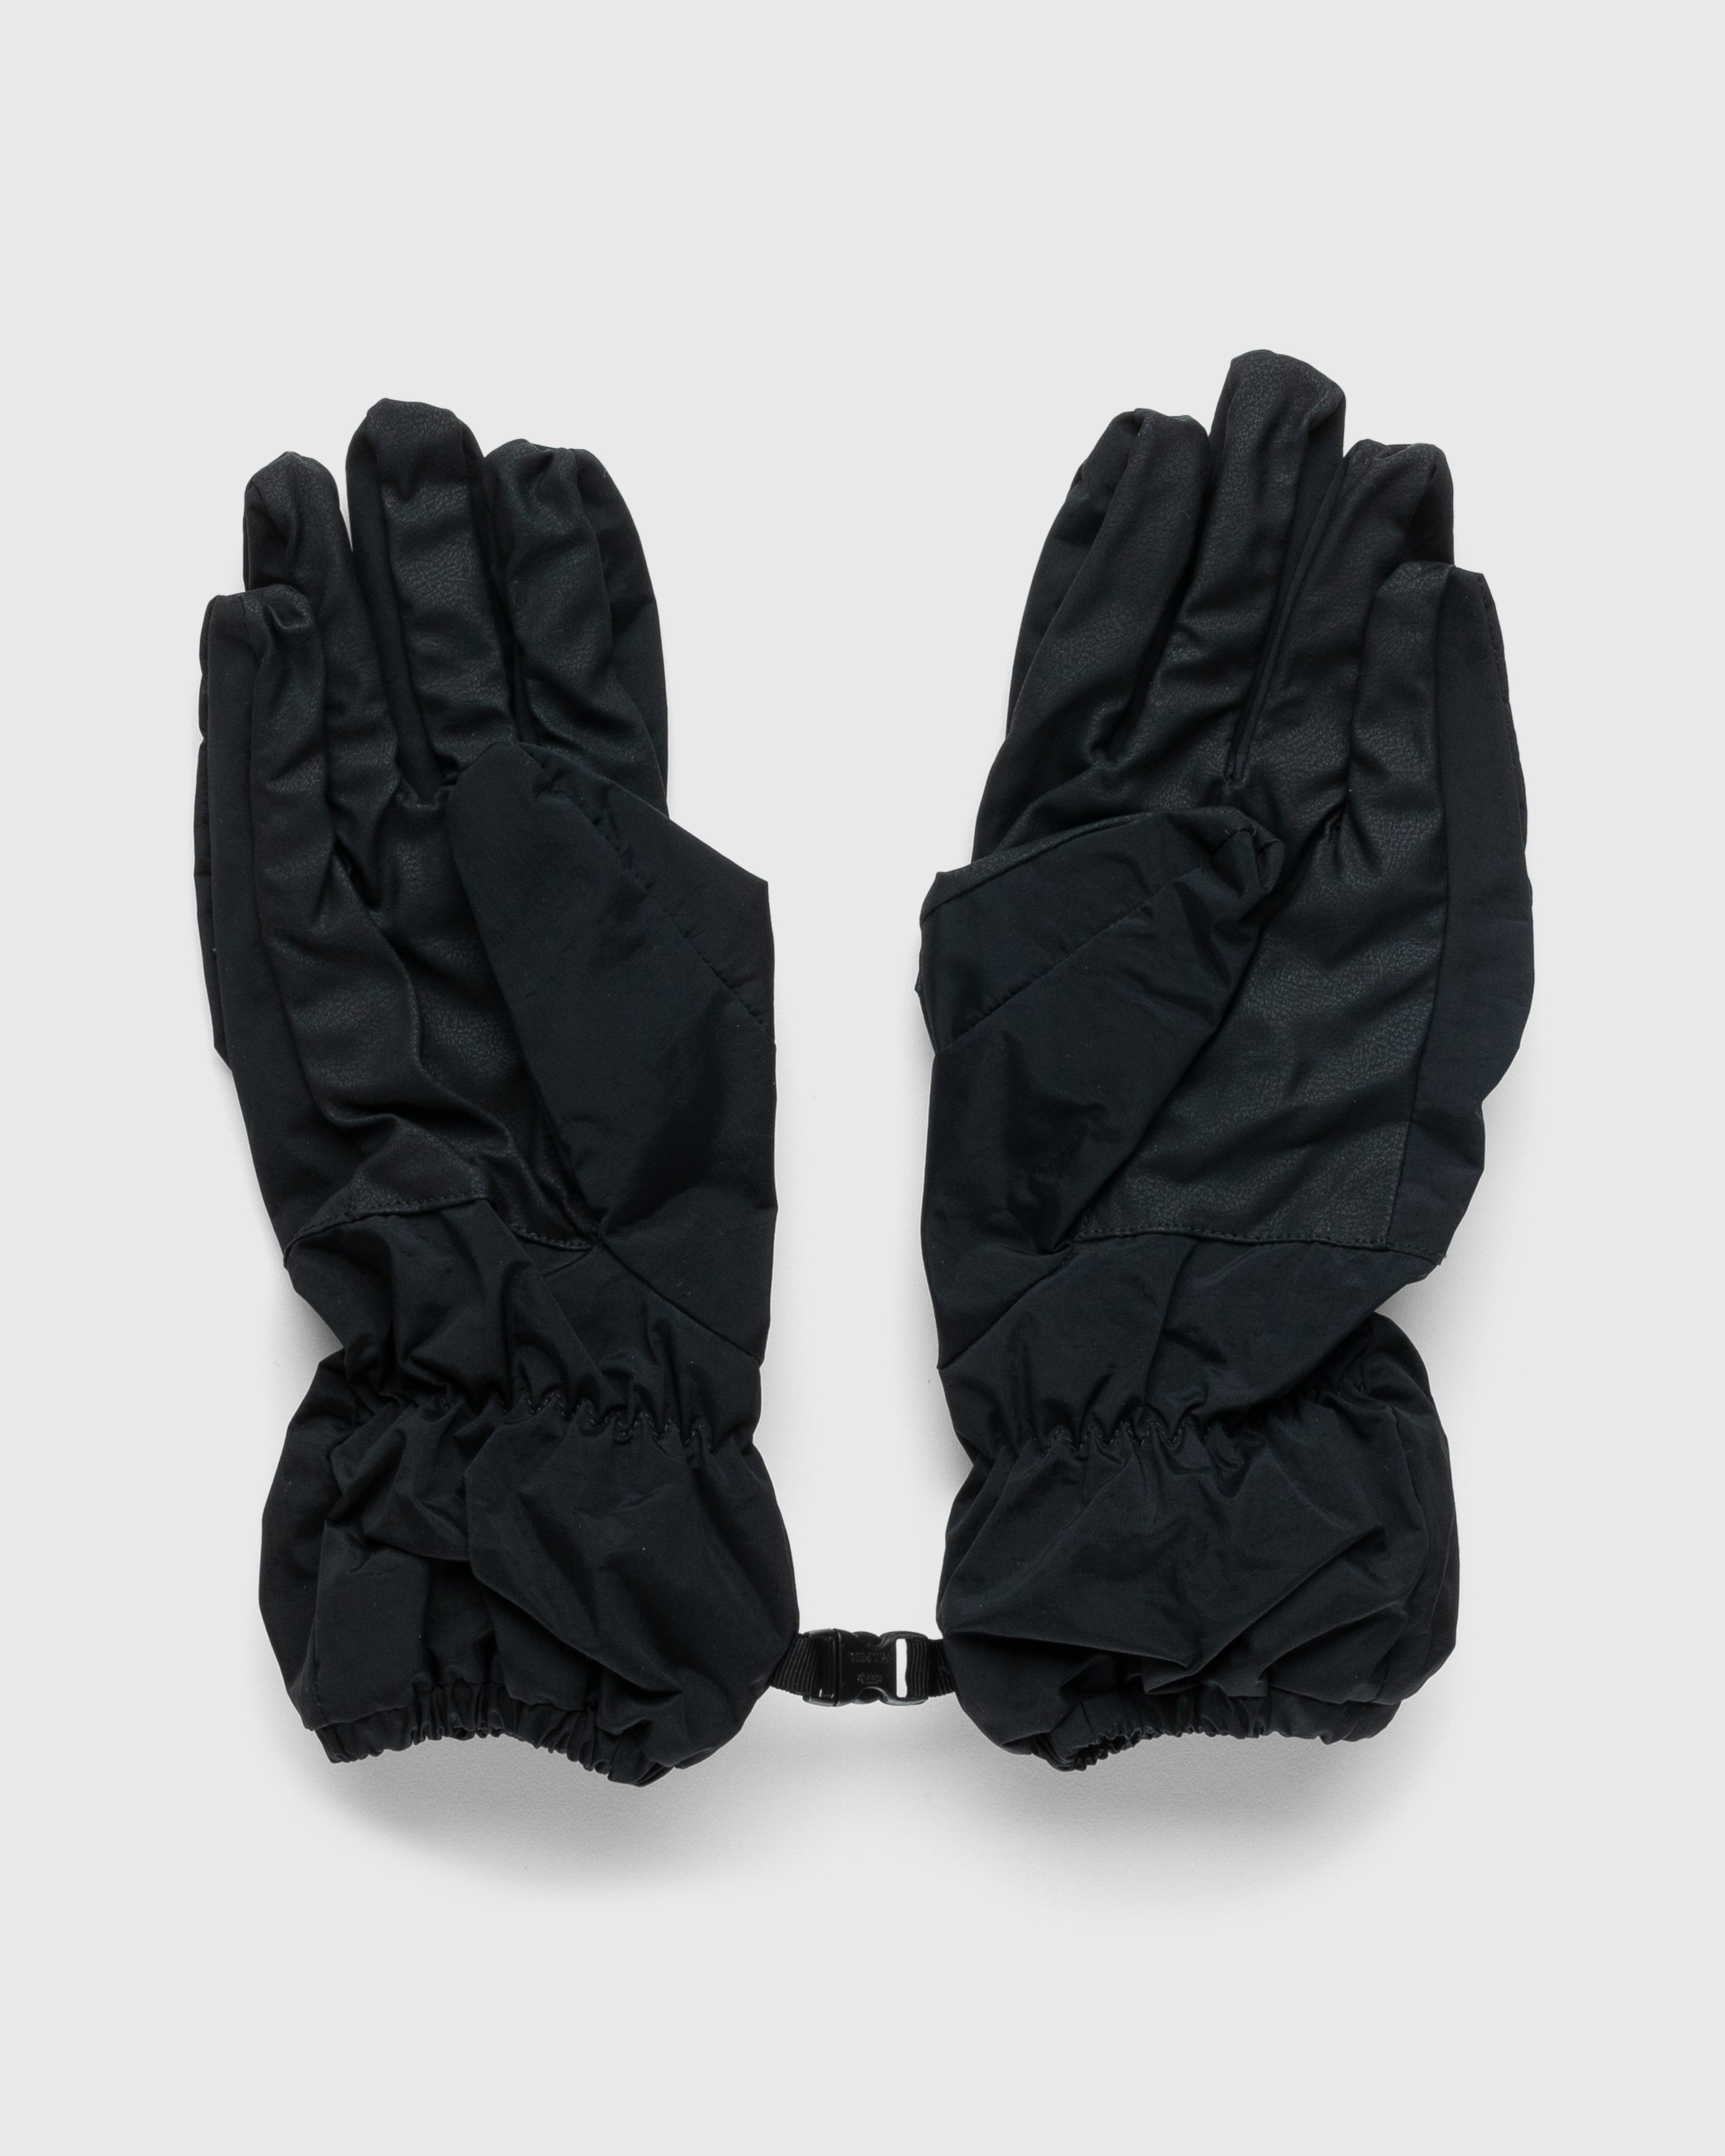 Stone Island - Nylon Metal Gloves Black - Accessories - Black - Image 2